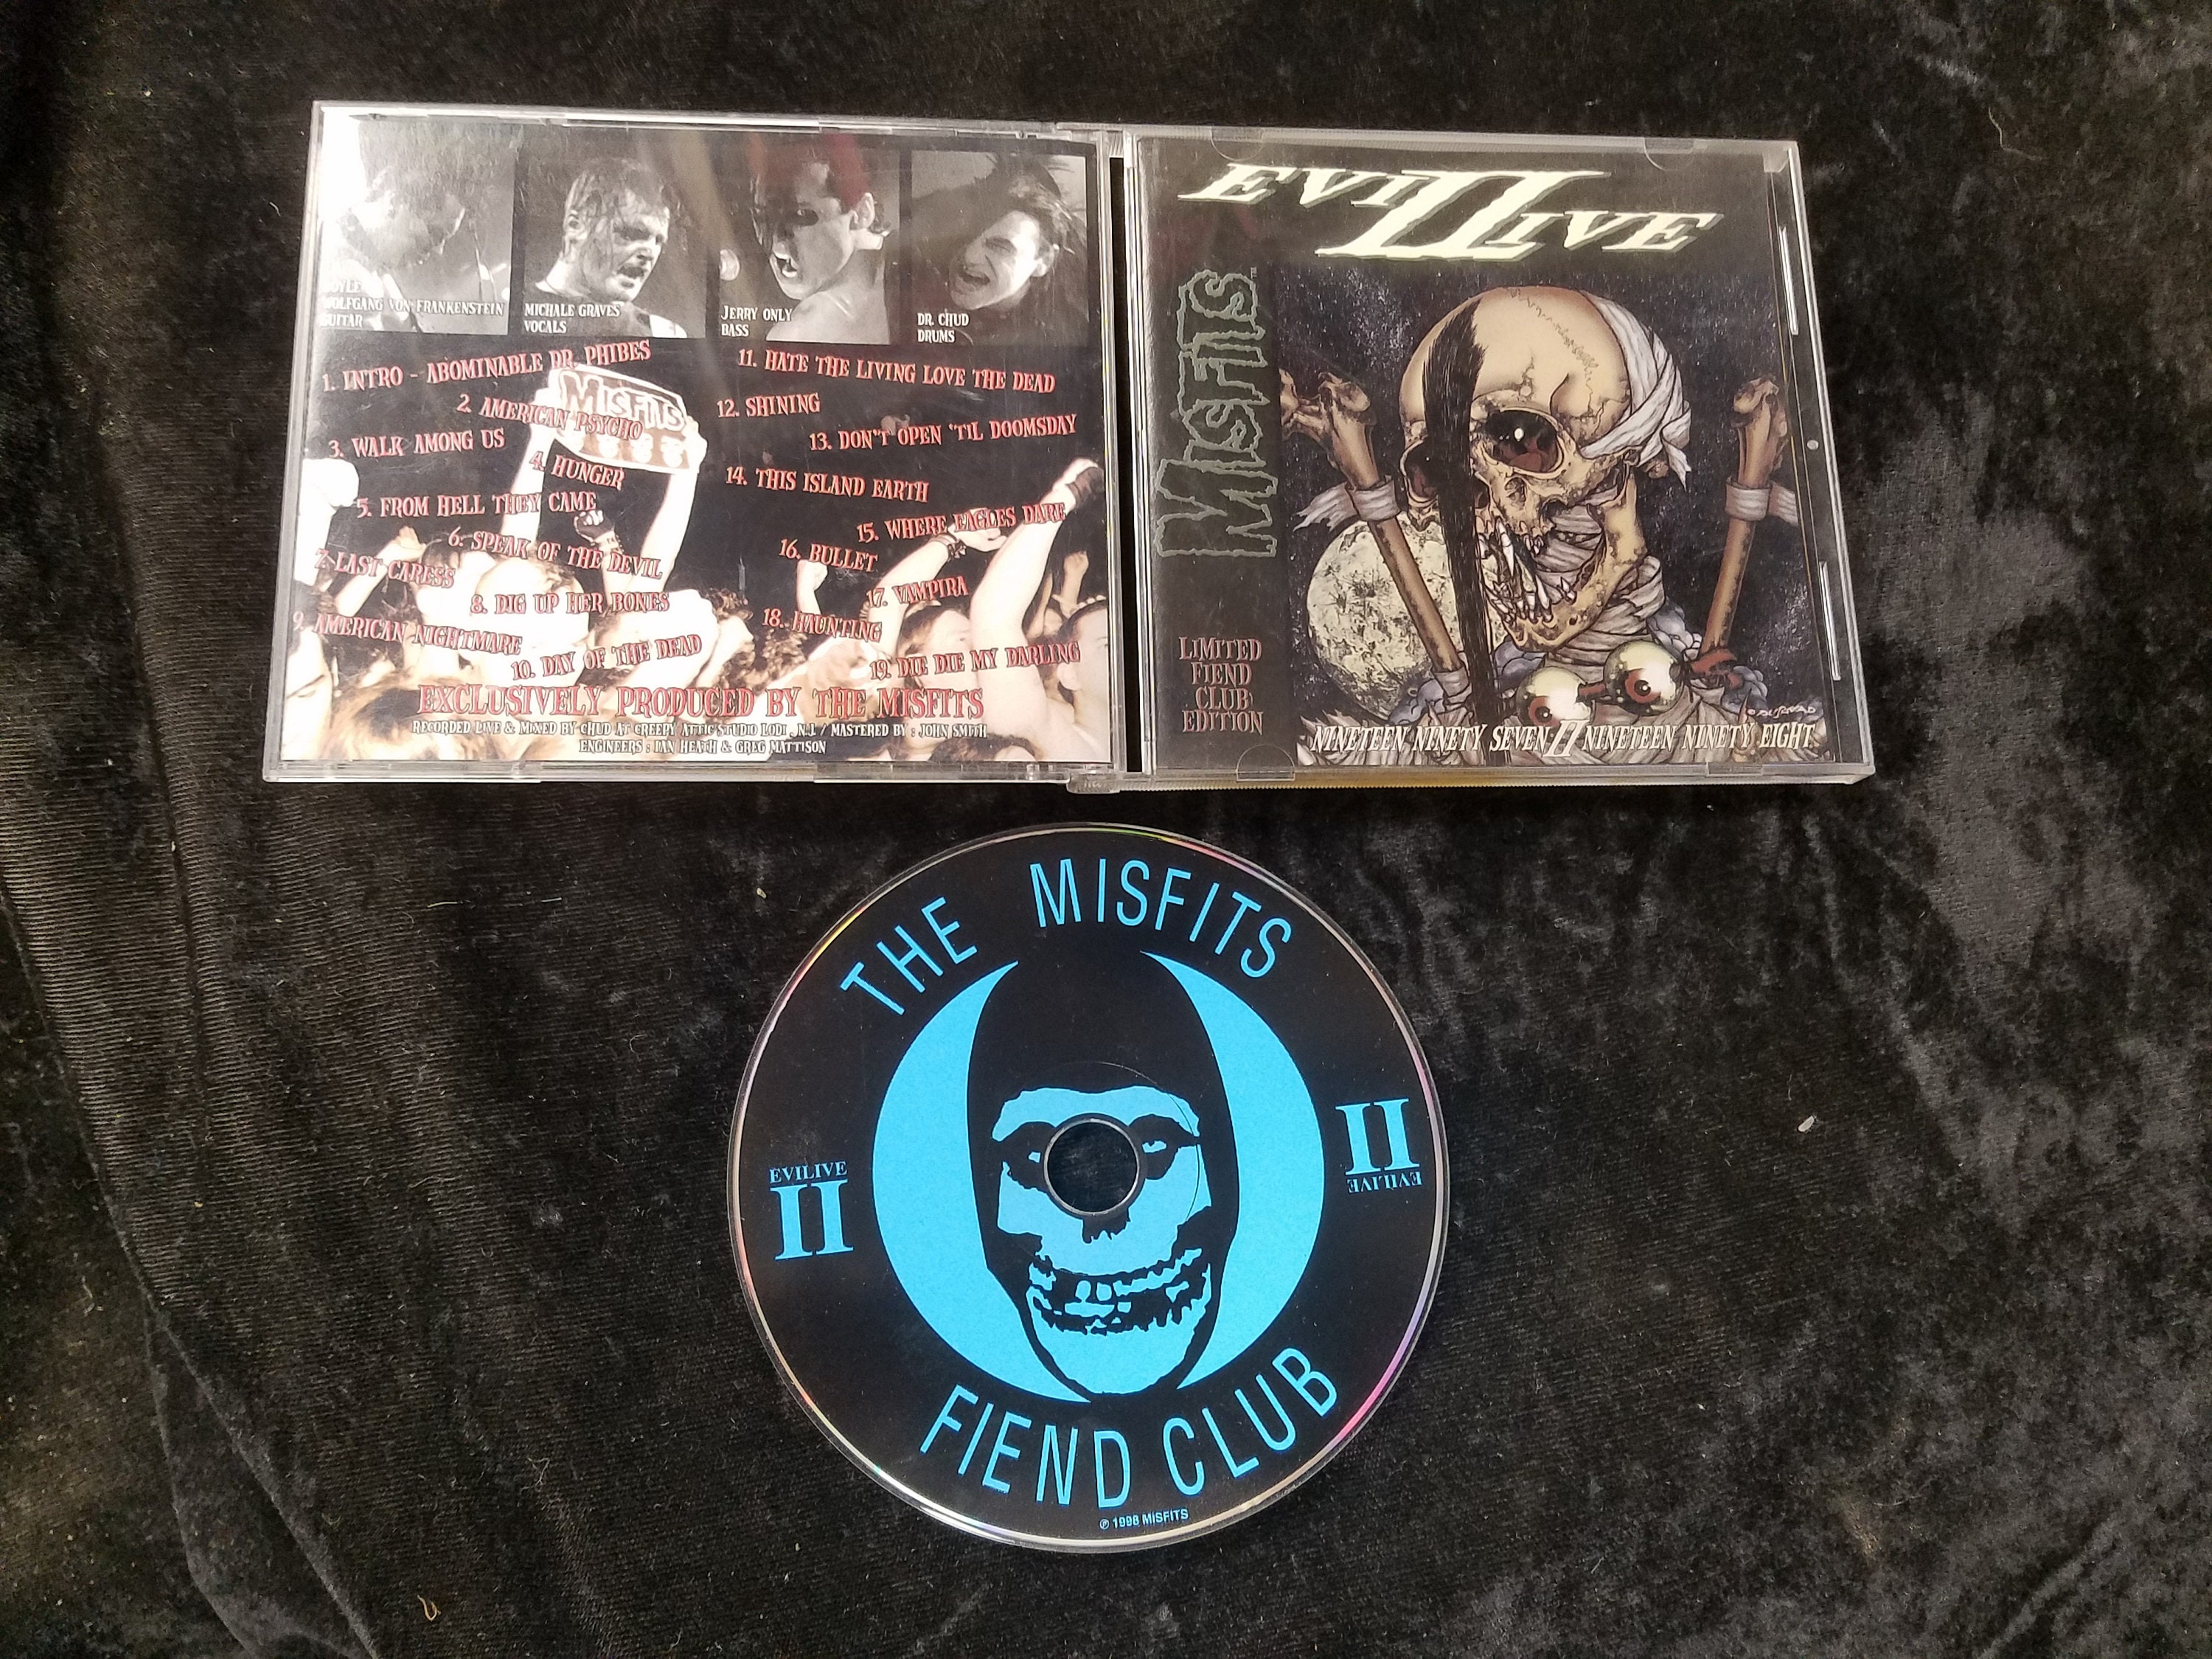 Misfits Evilive II CD 1998 Limited Fiend Club Edition MISFITS Self Released  Rare